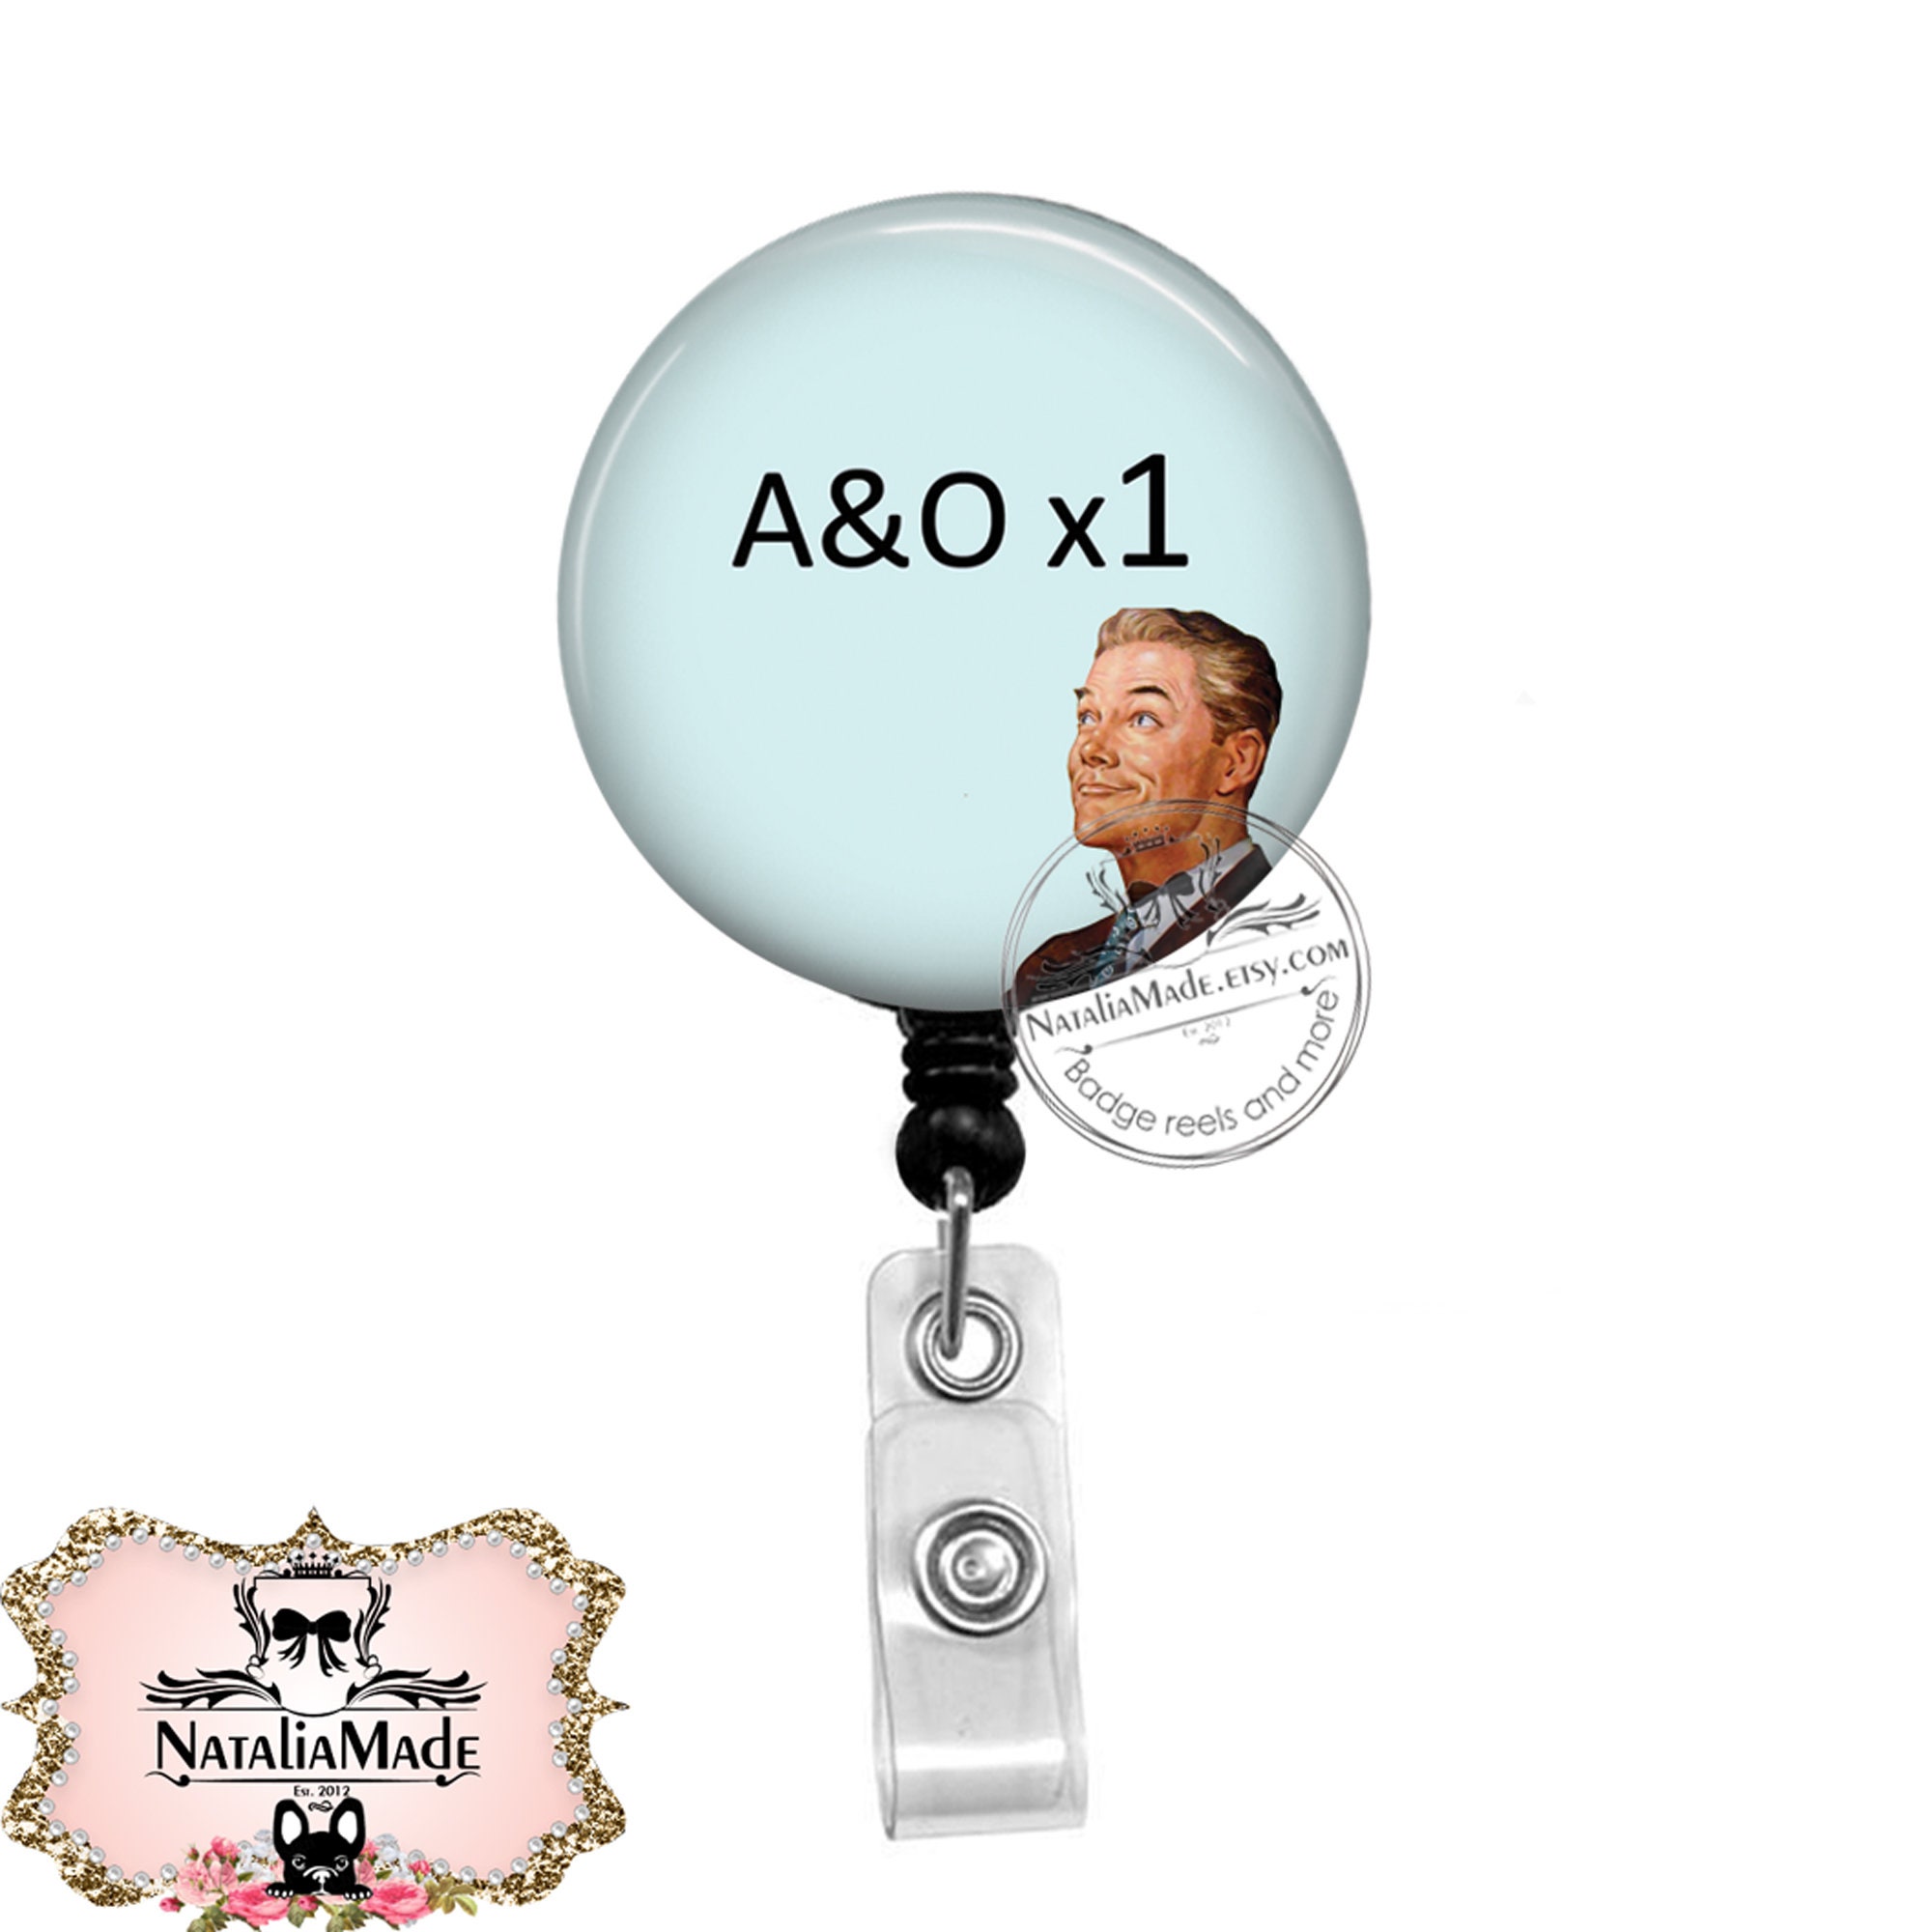 A&O x1 Badge Reel - Retractable Badge Holder - Funny Nurse Badge Holder - EMT - Alert and Oriented X1 Badge clip - Carabiner - Lanyard